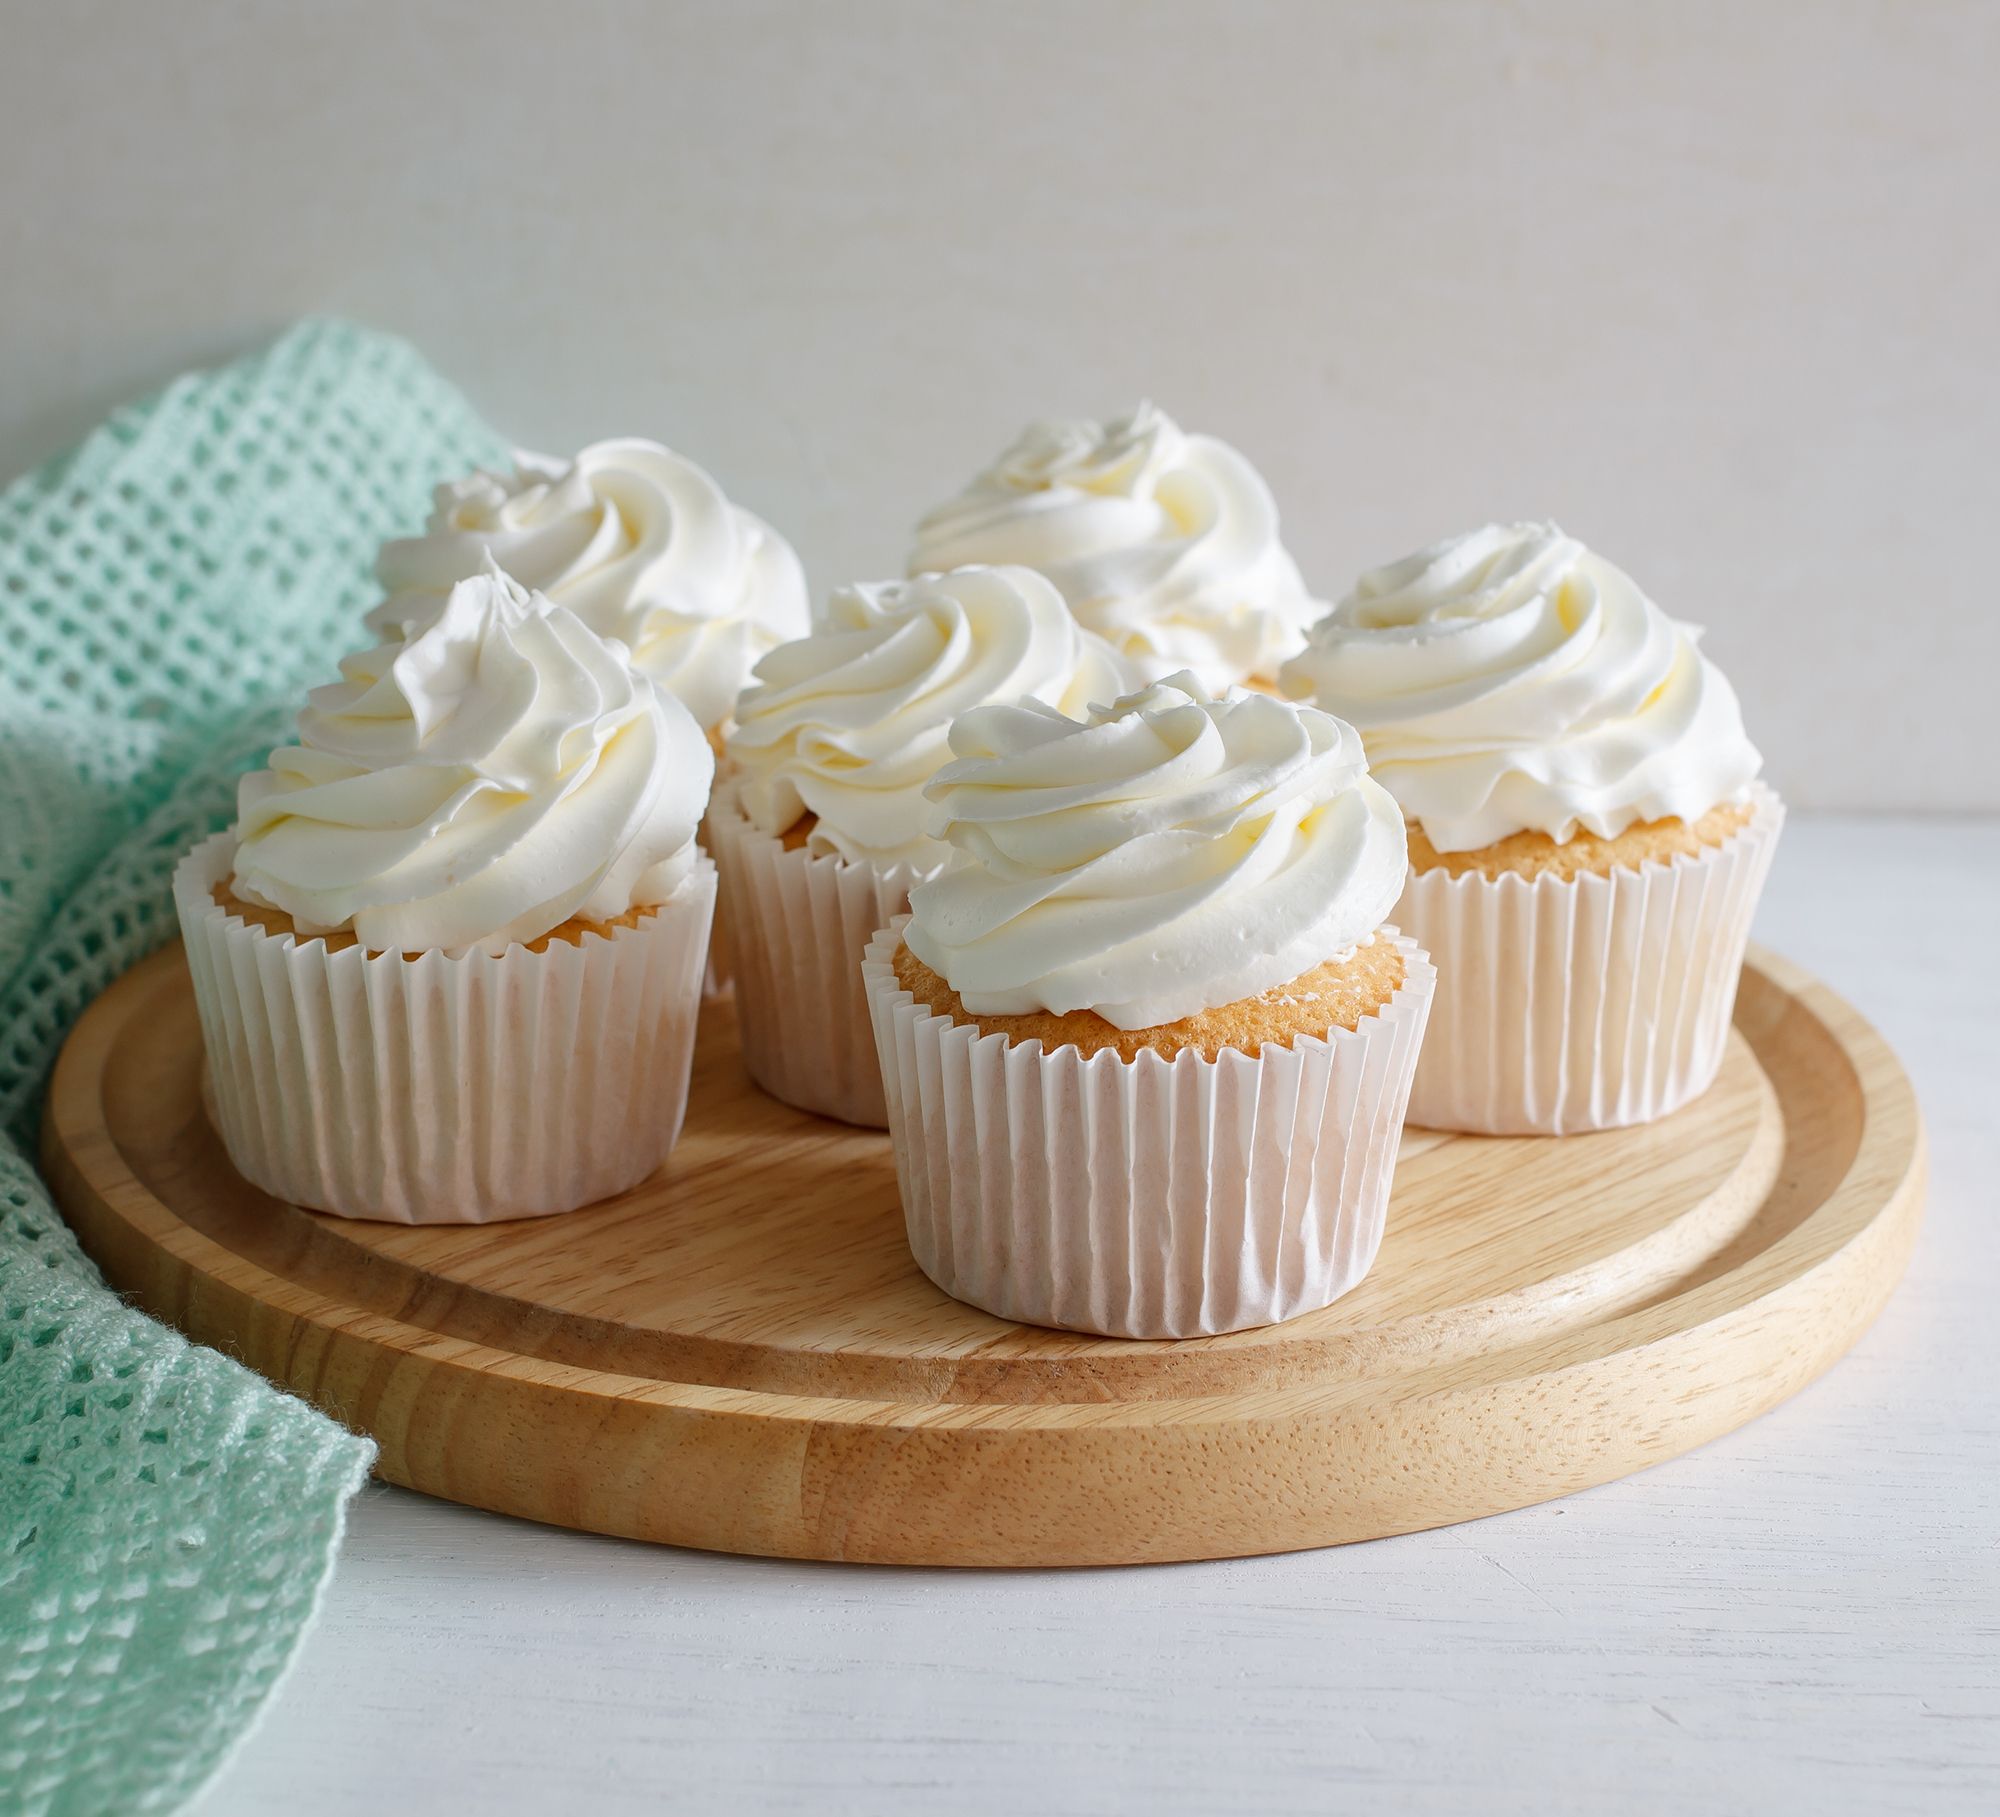 5 Steps to Convert a Cake Recipe into Cupcakes